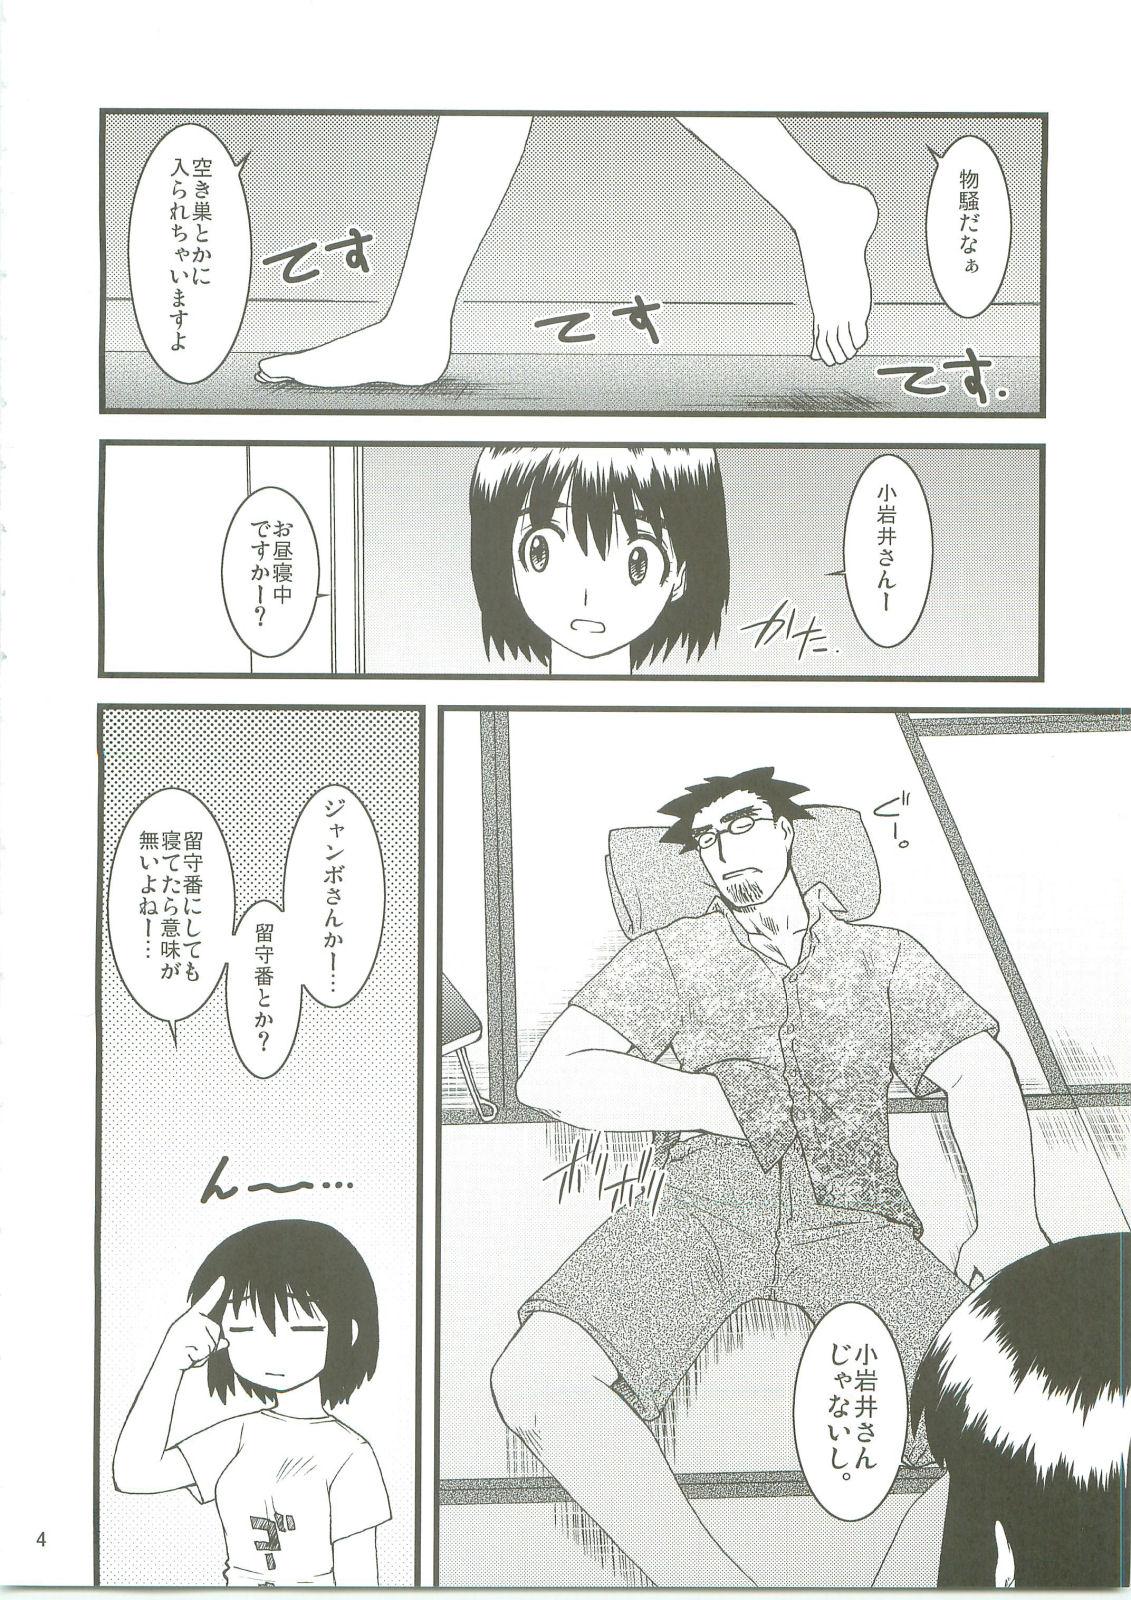 Pool Fuukato! - Yotsubato Playing - Page 3